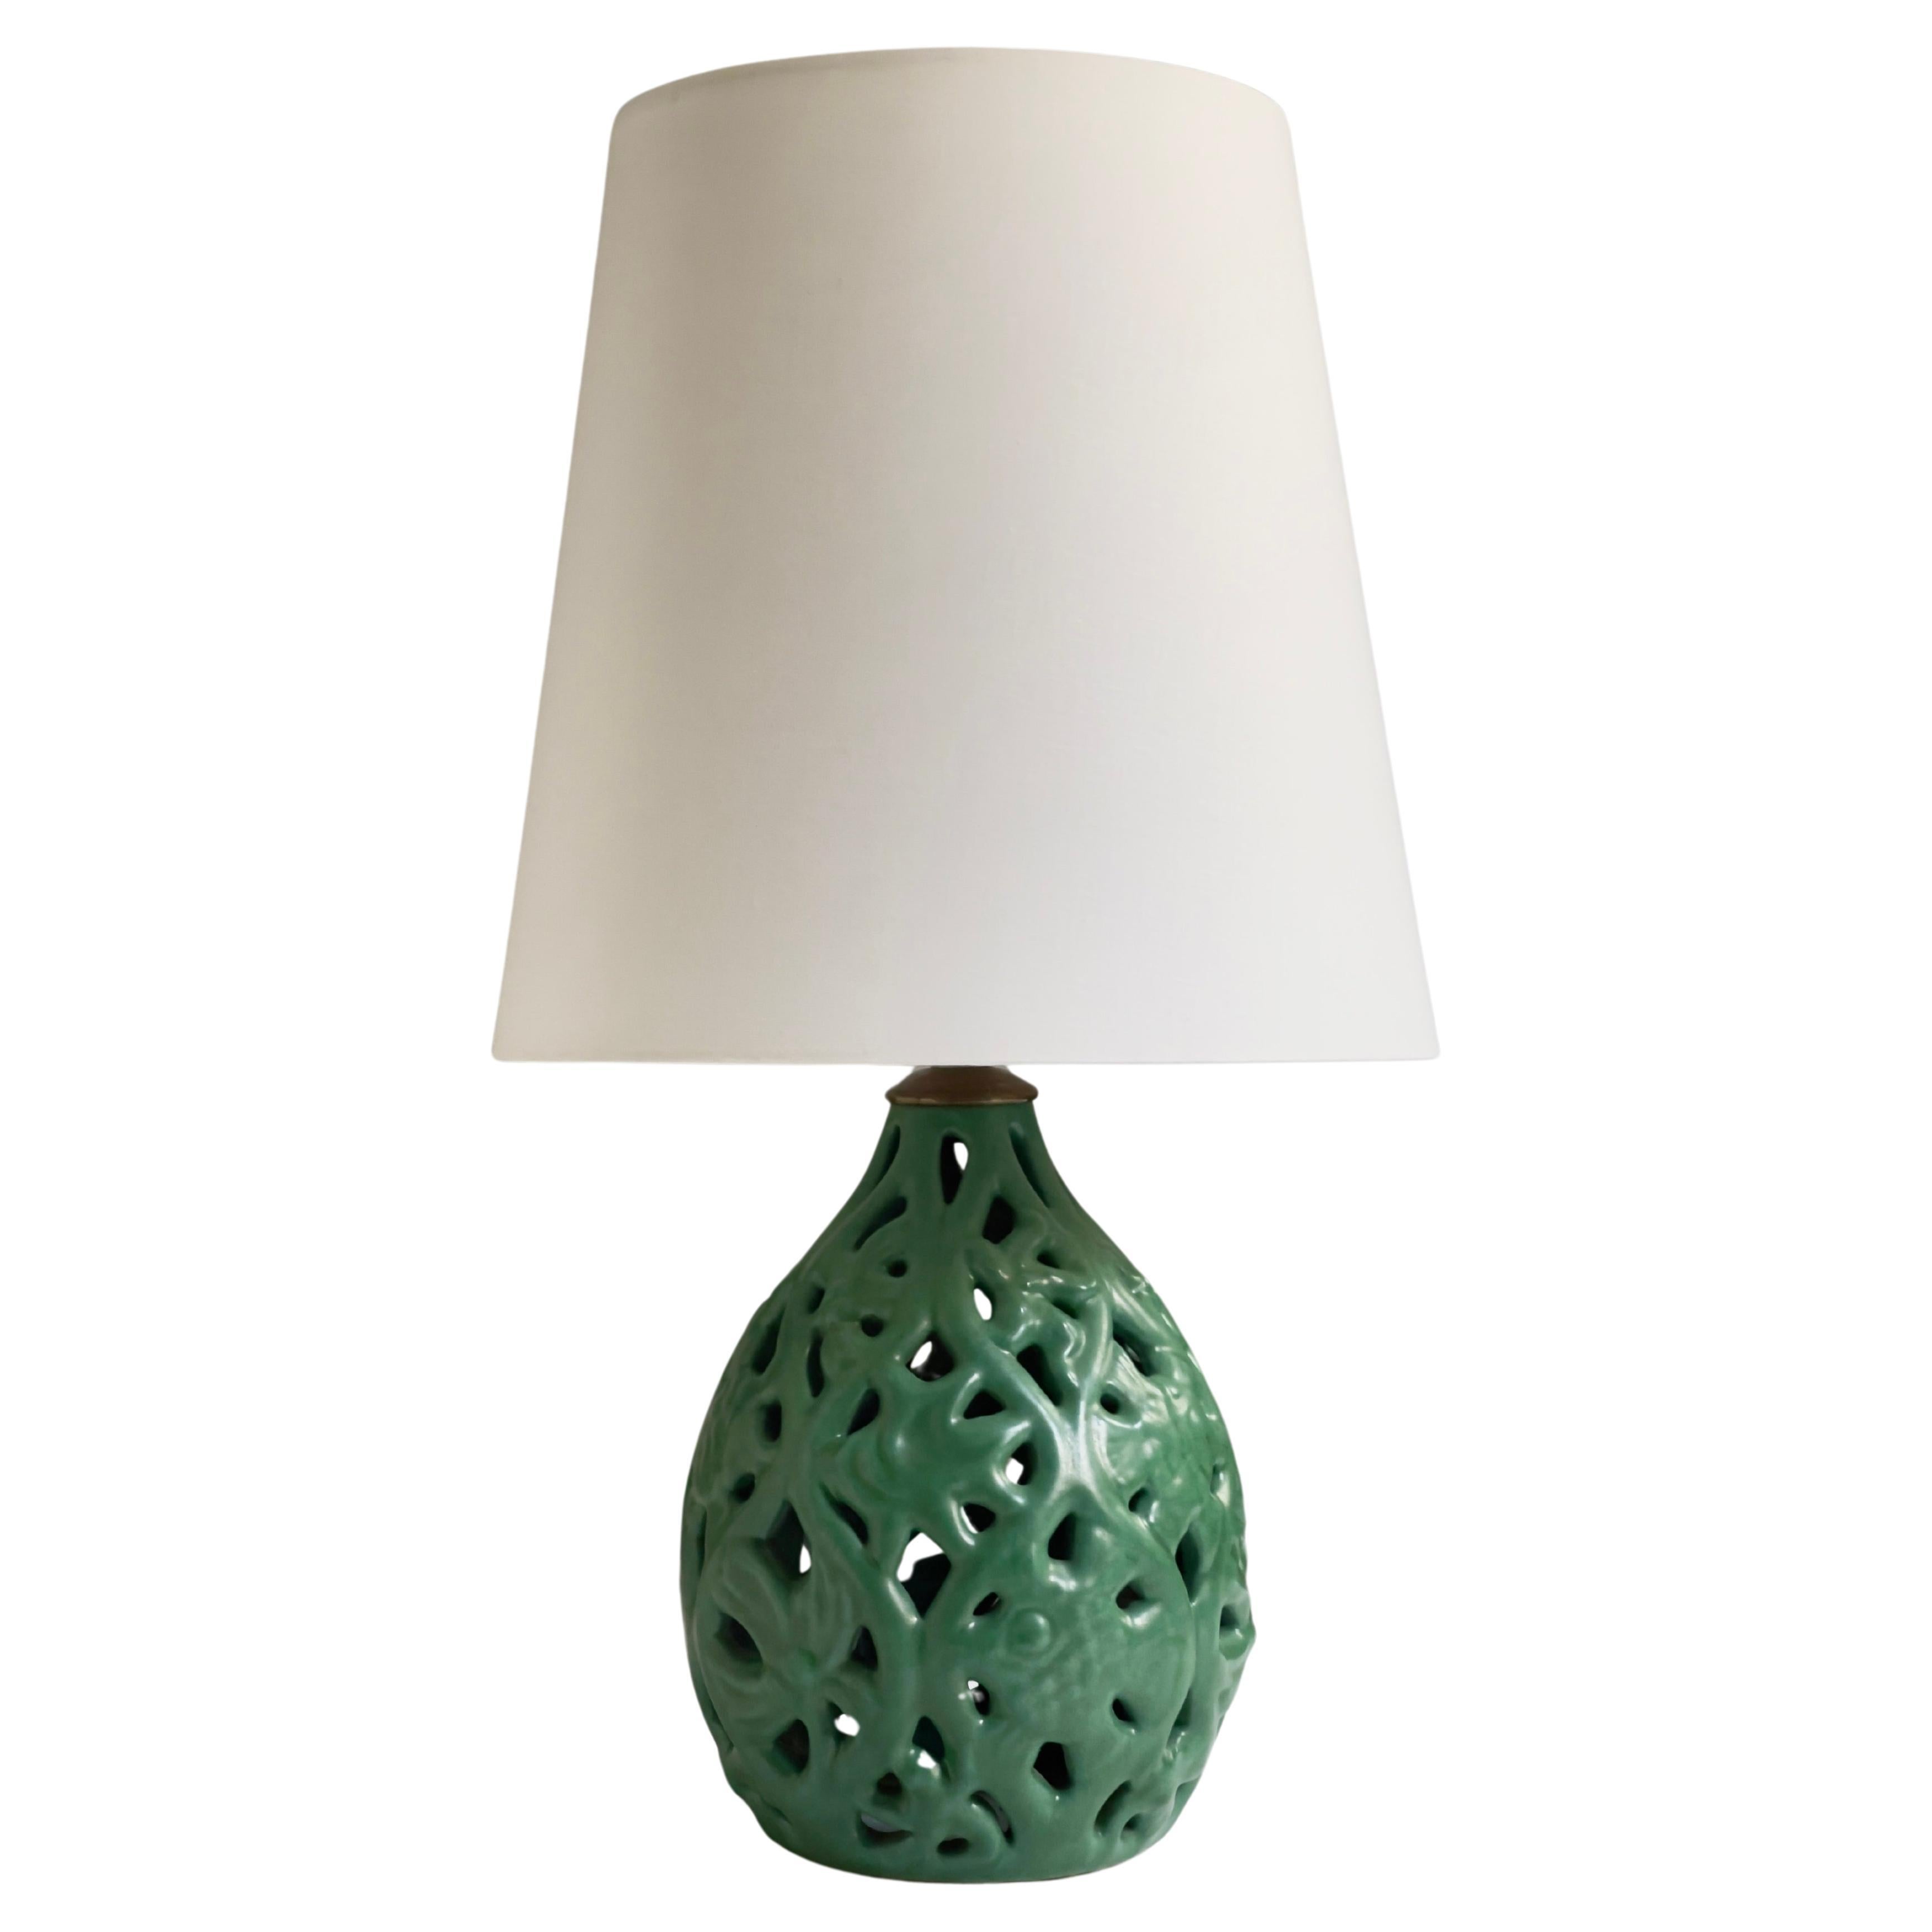  1940s Danish modern green glazed Ceramic Table Lamp by Michael Andersen For Sale